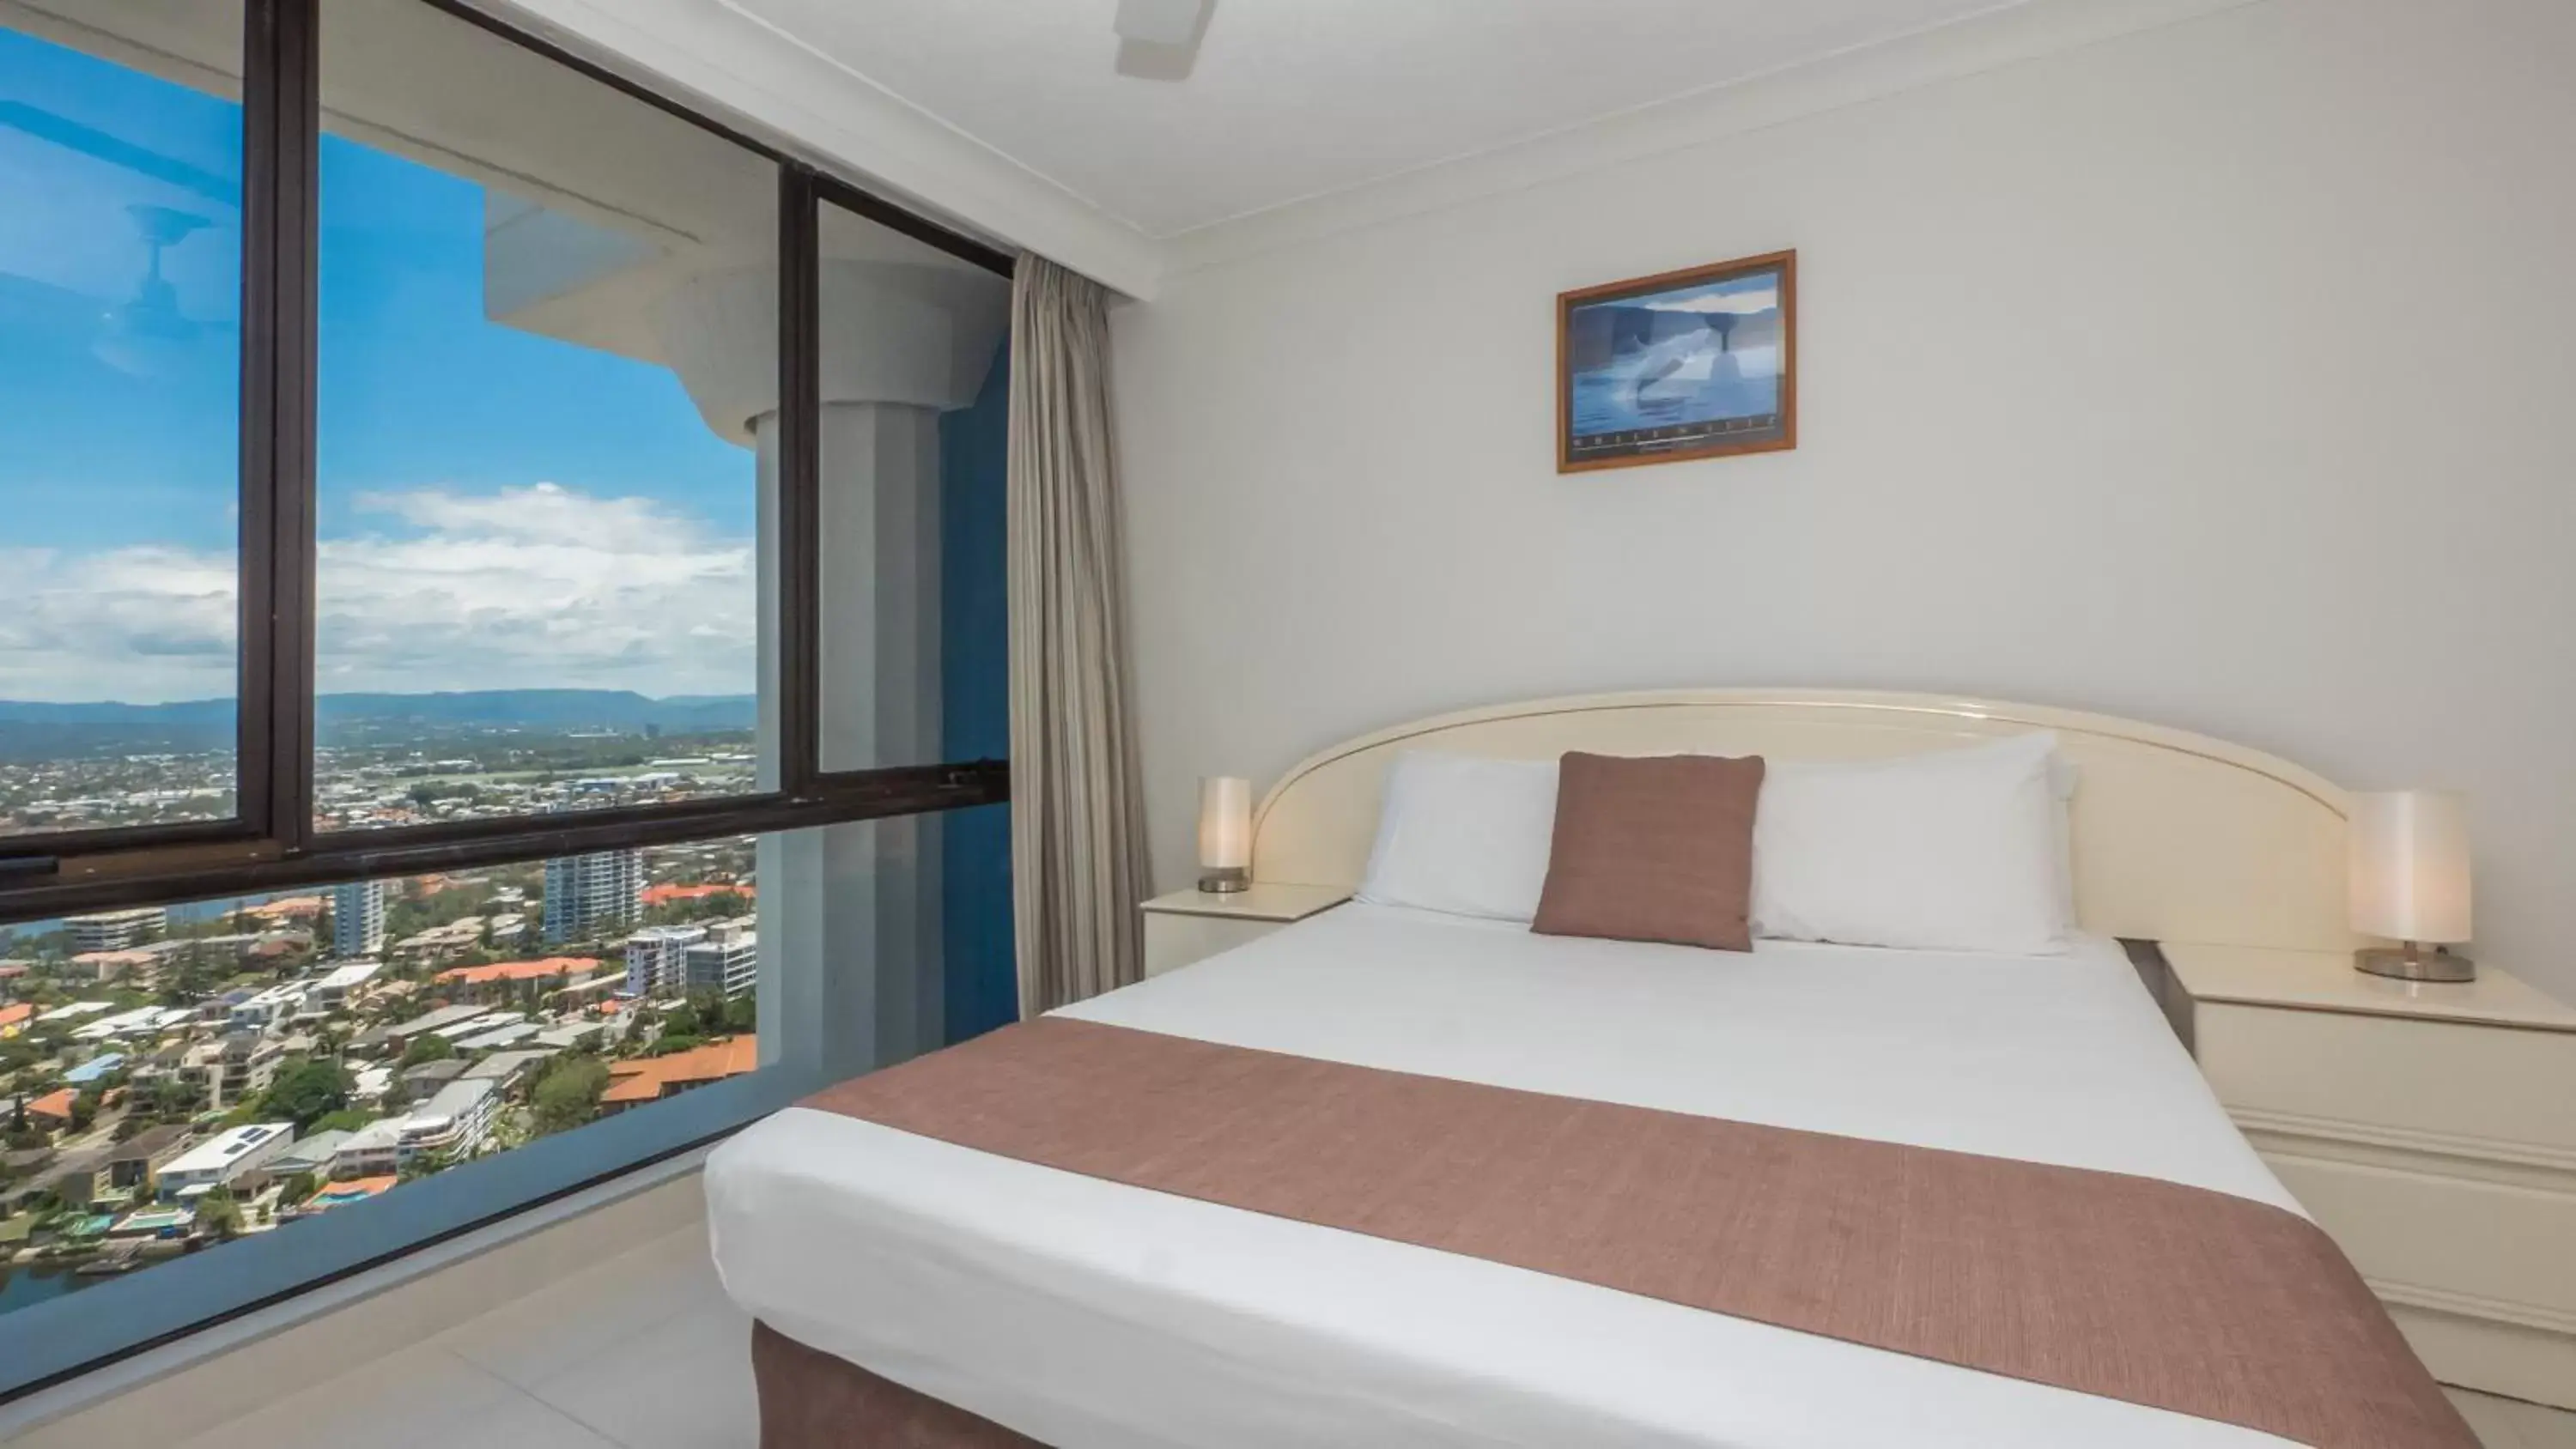 Bed, Room Photo in Aegean Resort Apartments